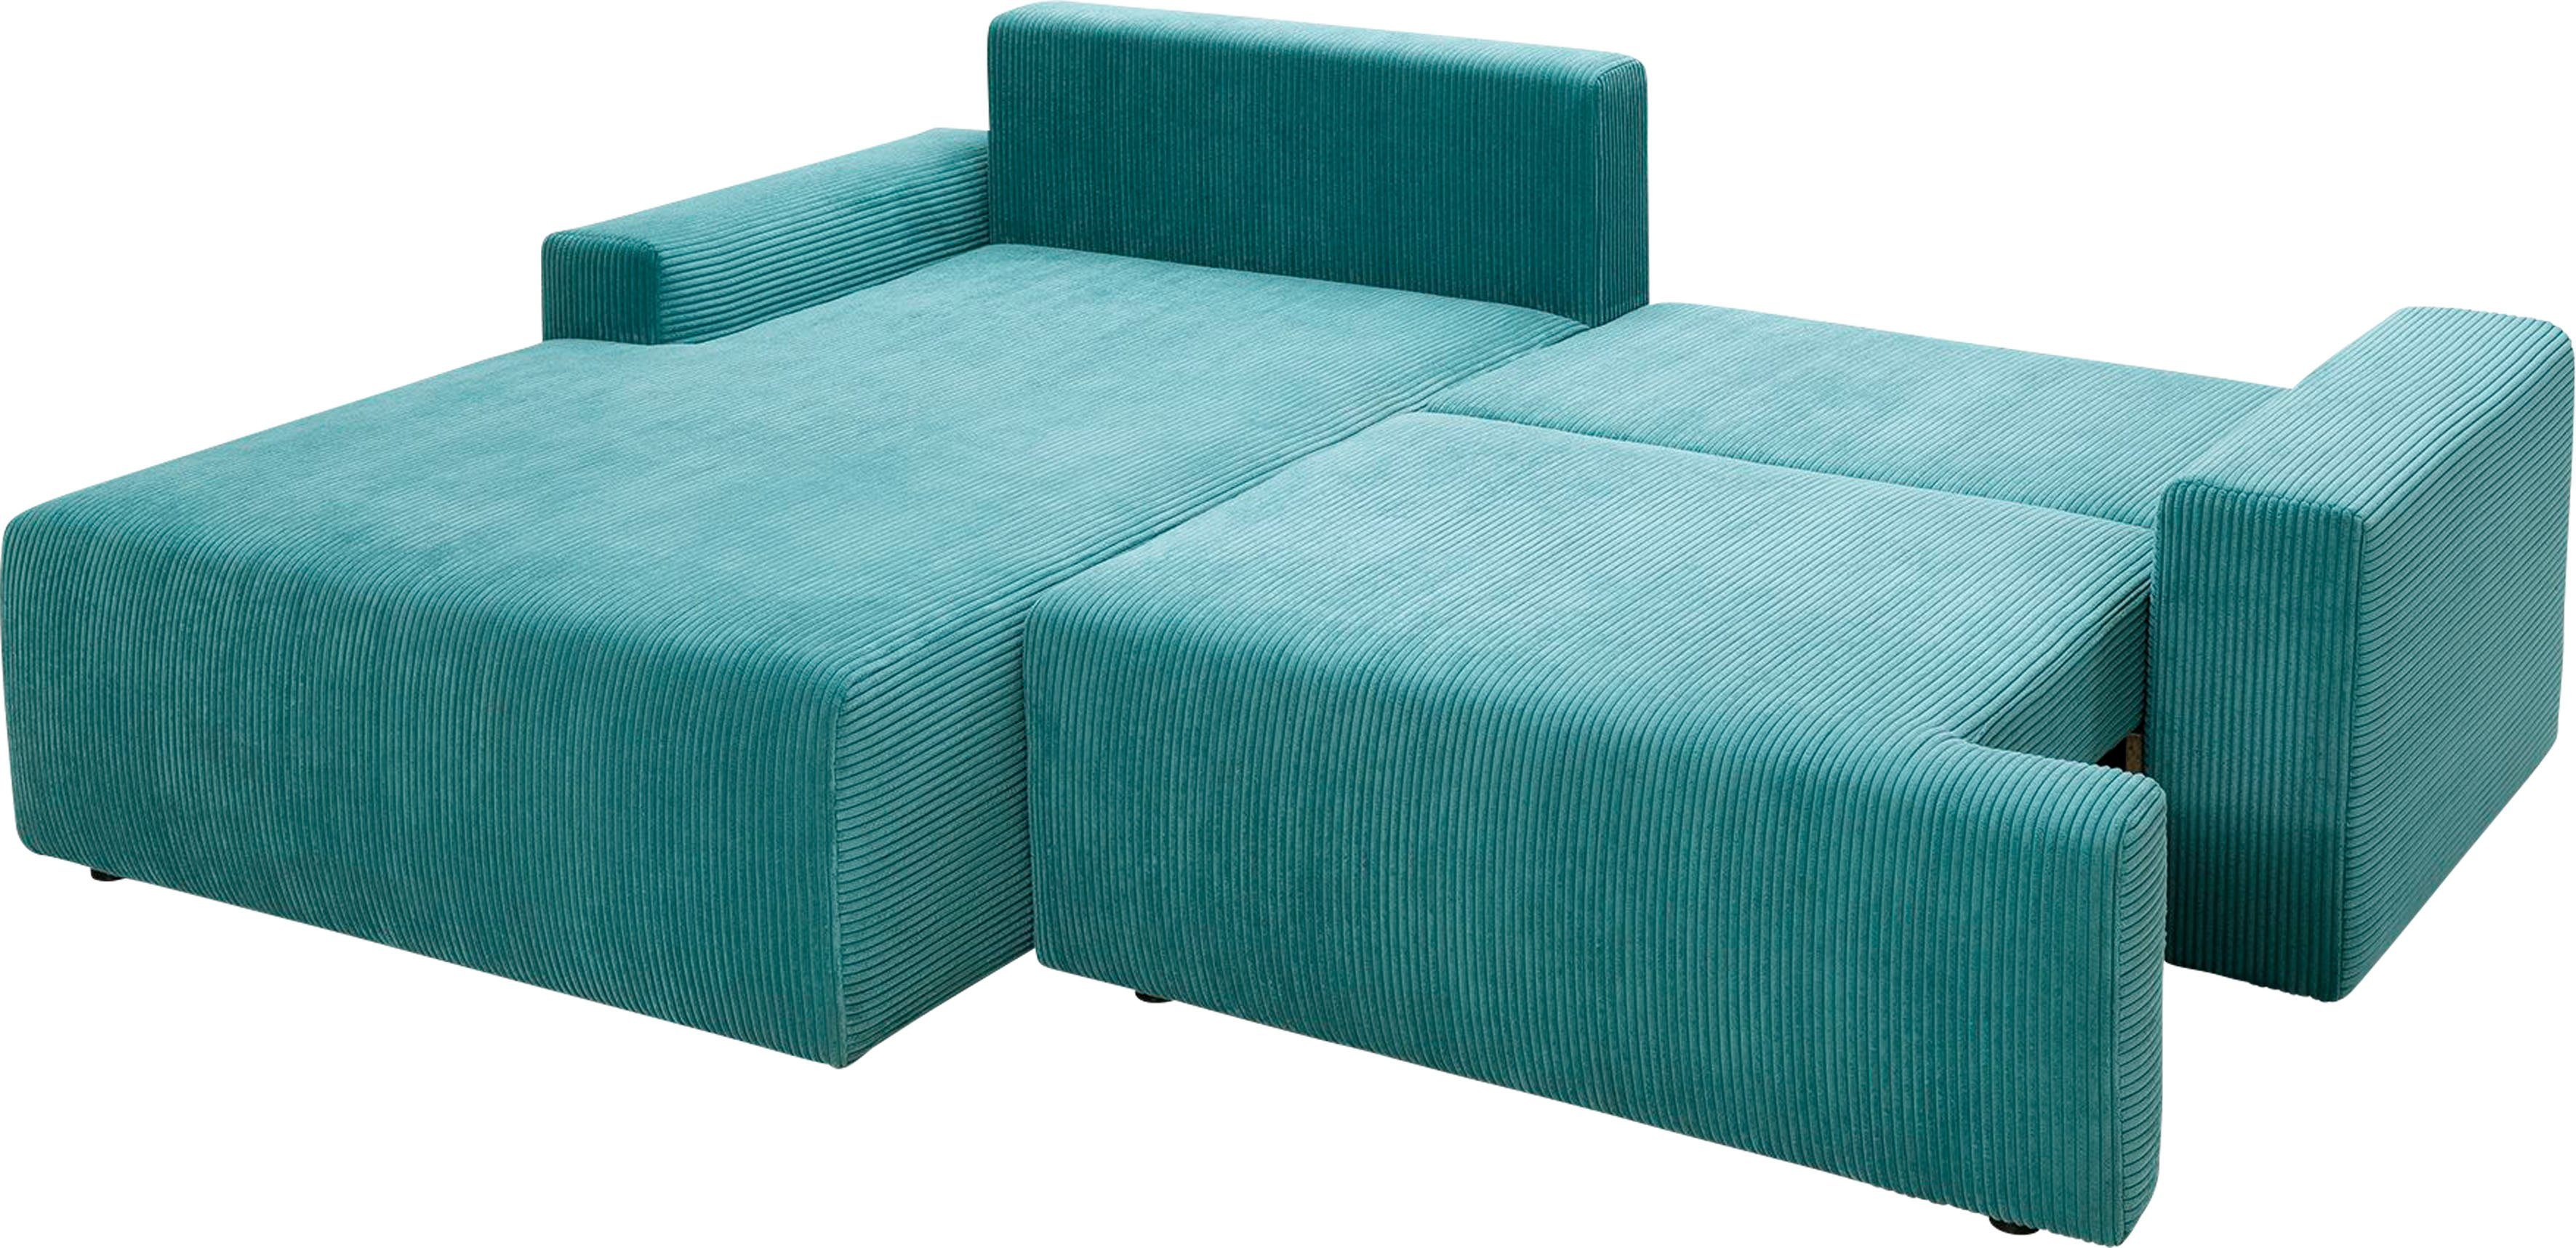 Orinoko, verschiedenen Cord-Farben sofa exxpo sky und fashion Bettkasten Ecksofa Bettfunktion in inklusive -